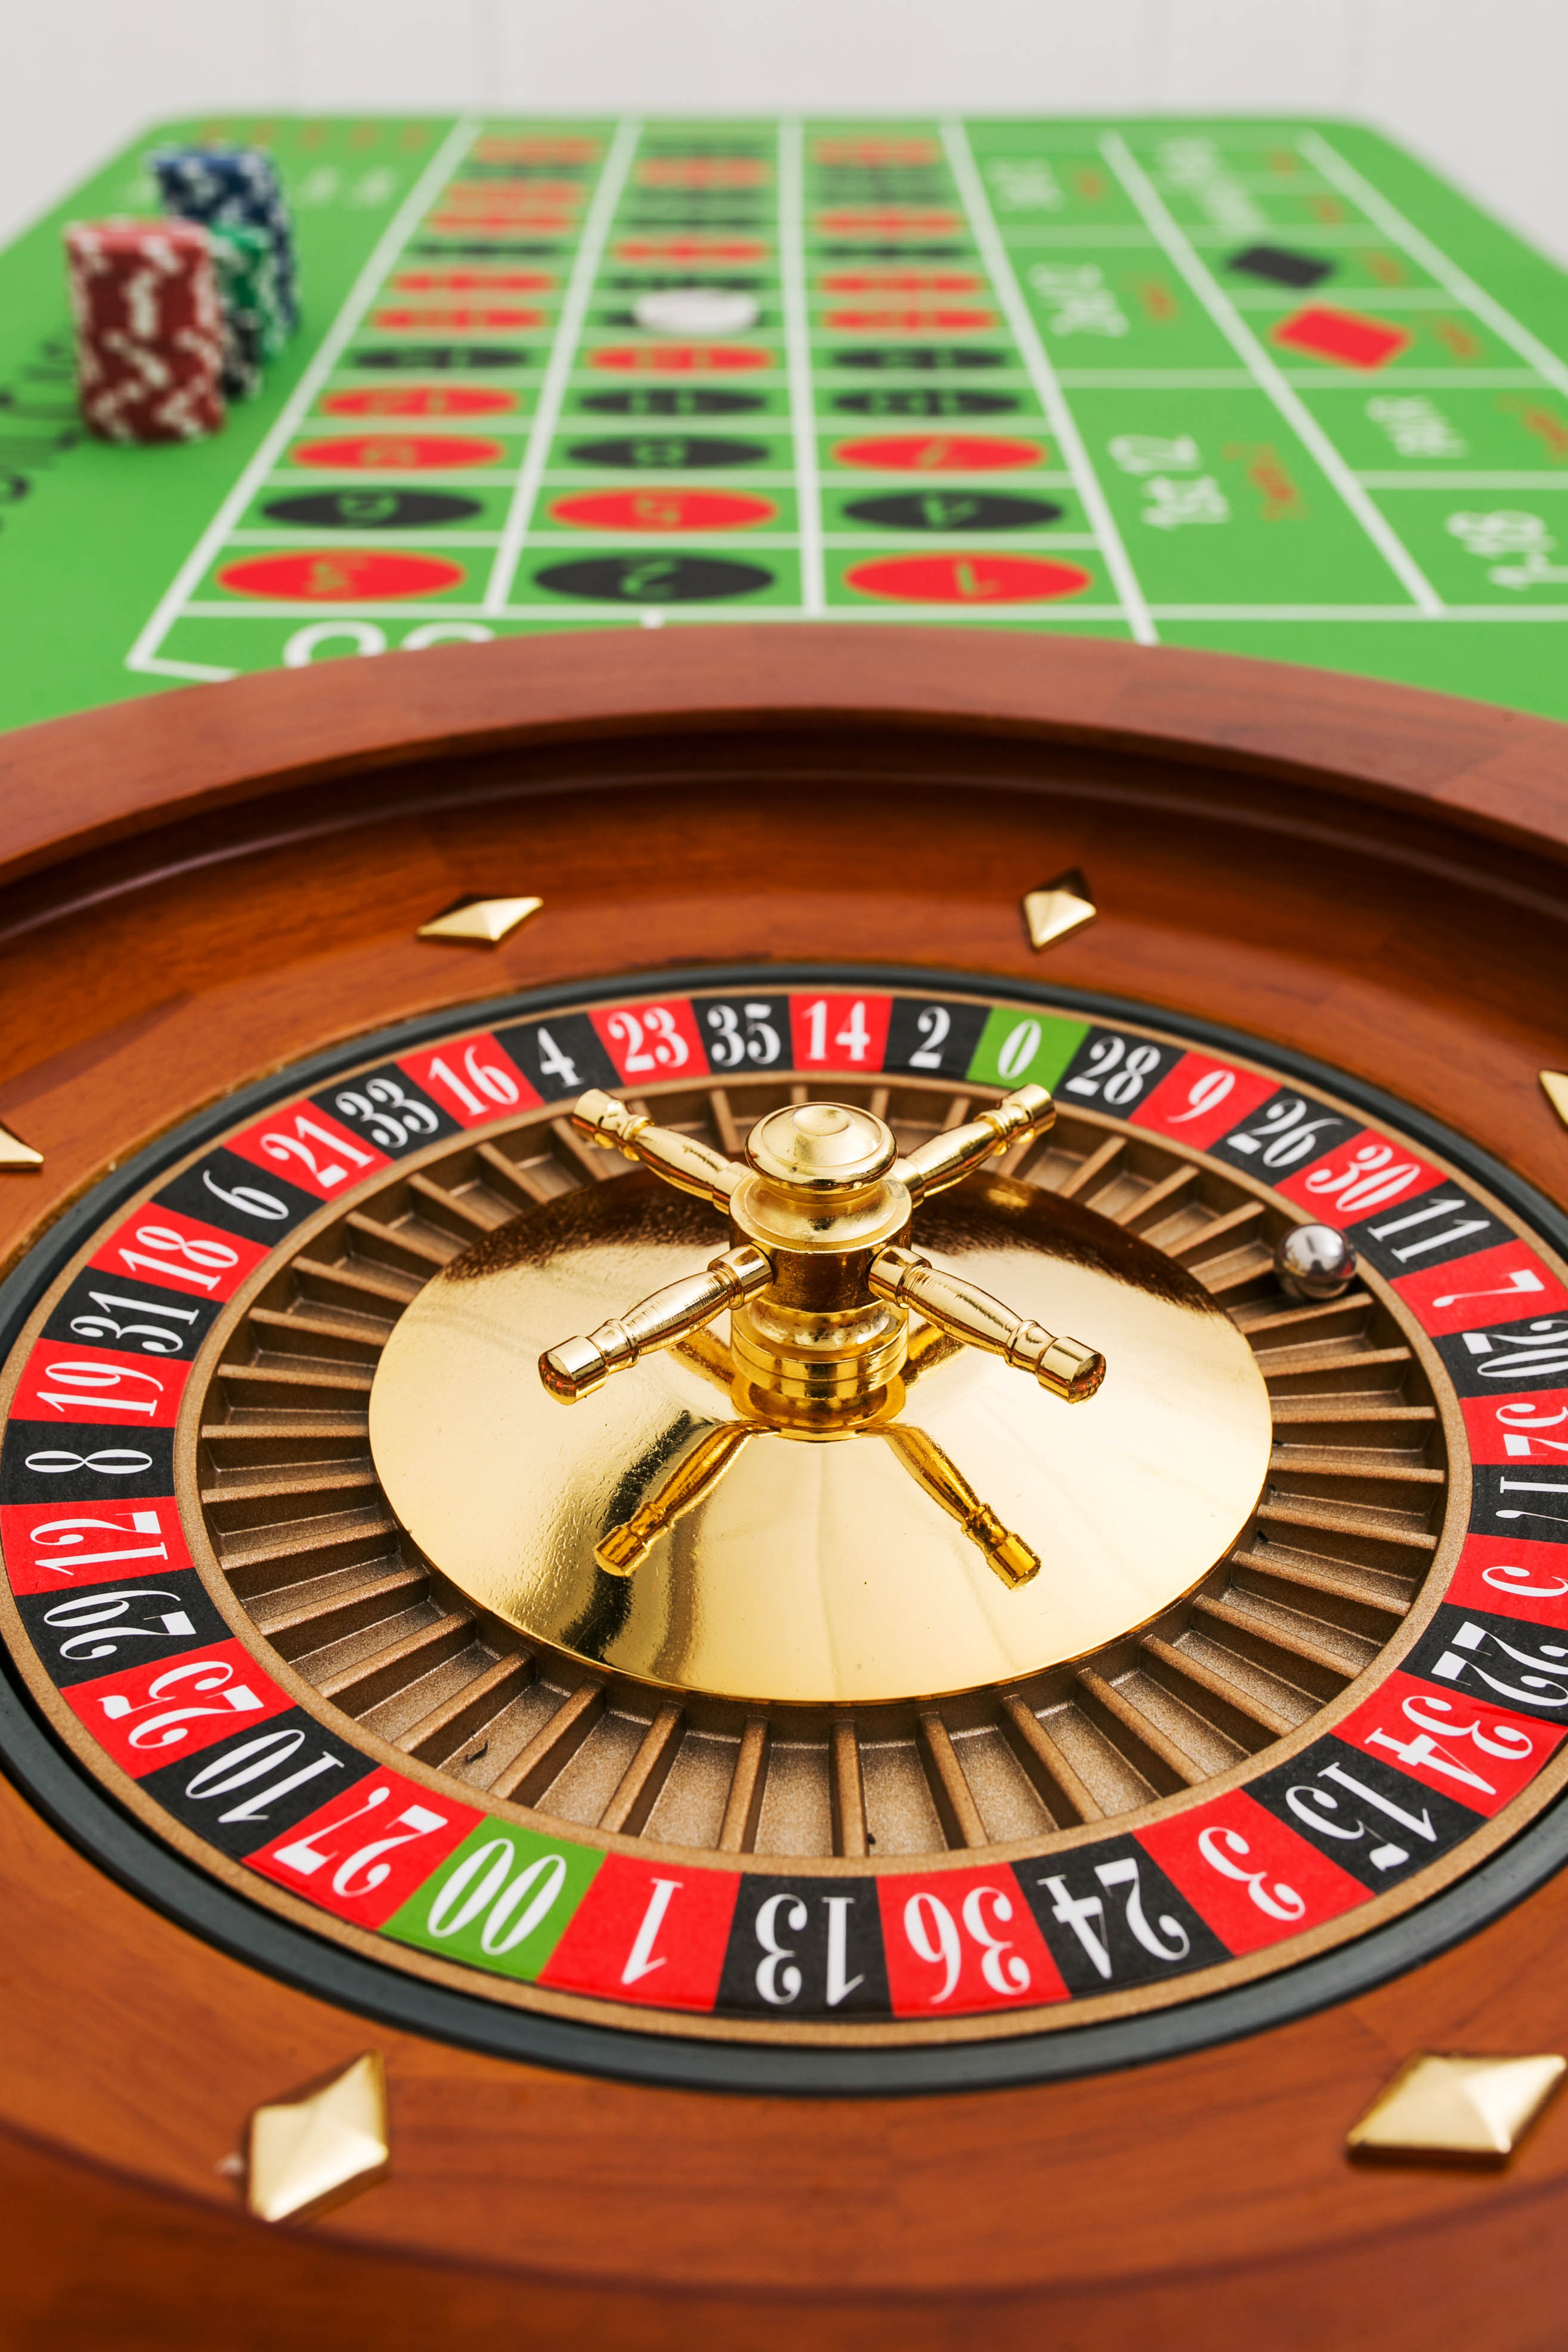 online casino рулетка